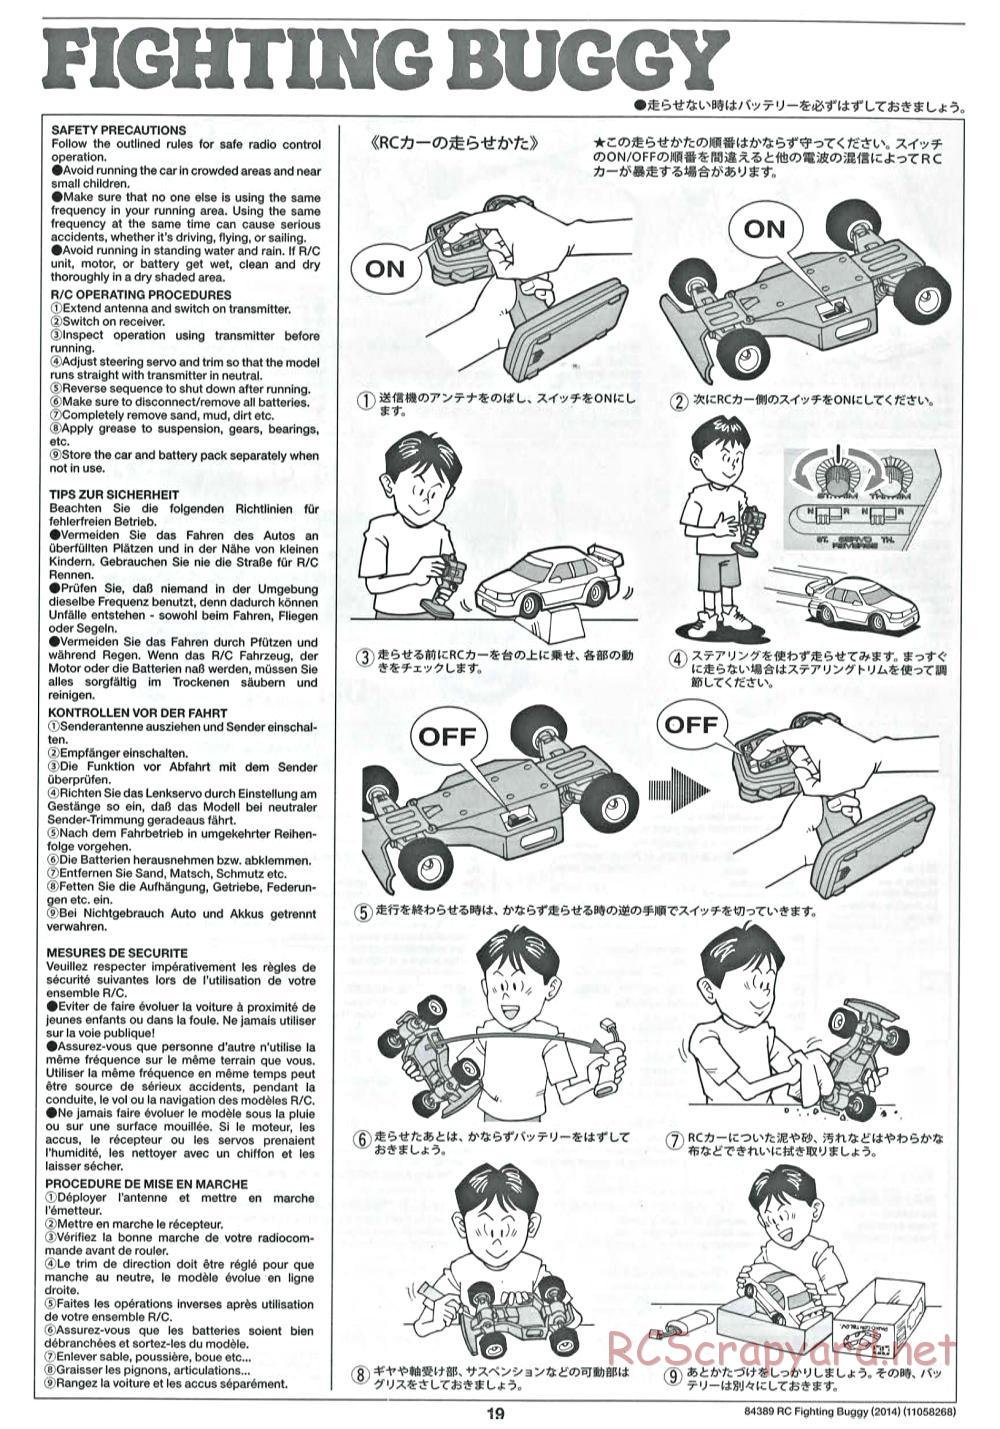 Tamiya - Fighting Buggy (2014) Chassis - Manual - Page 19